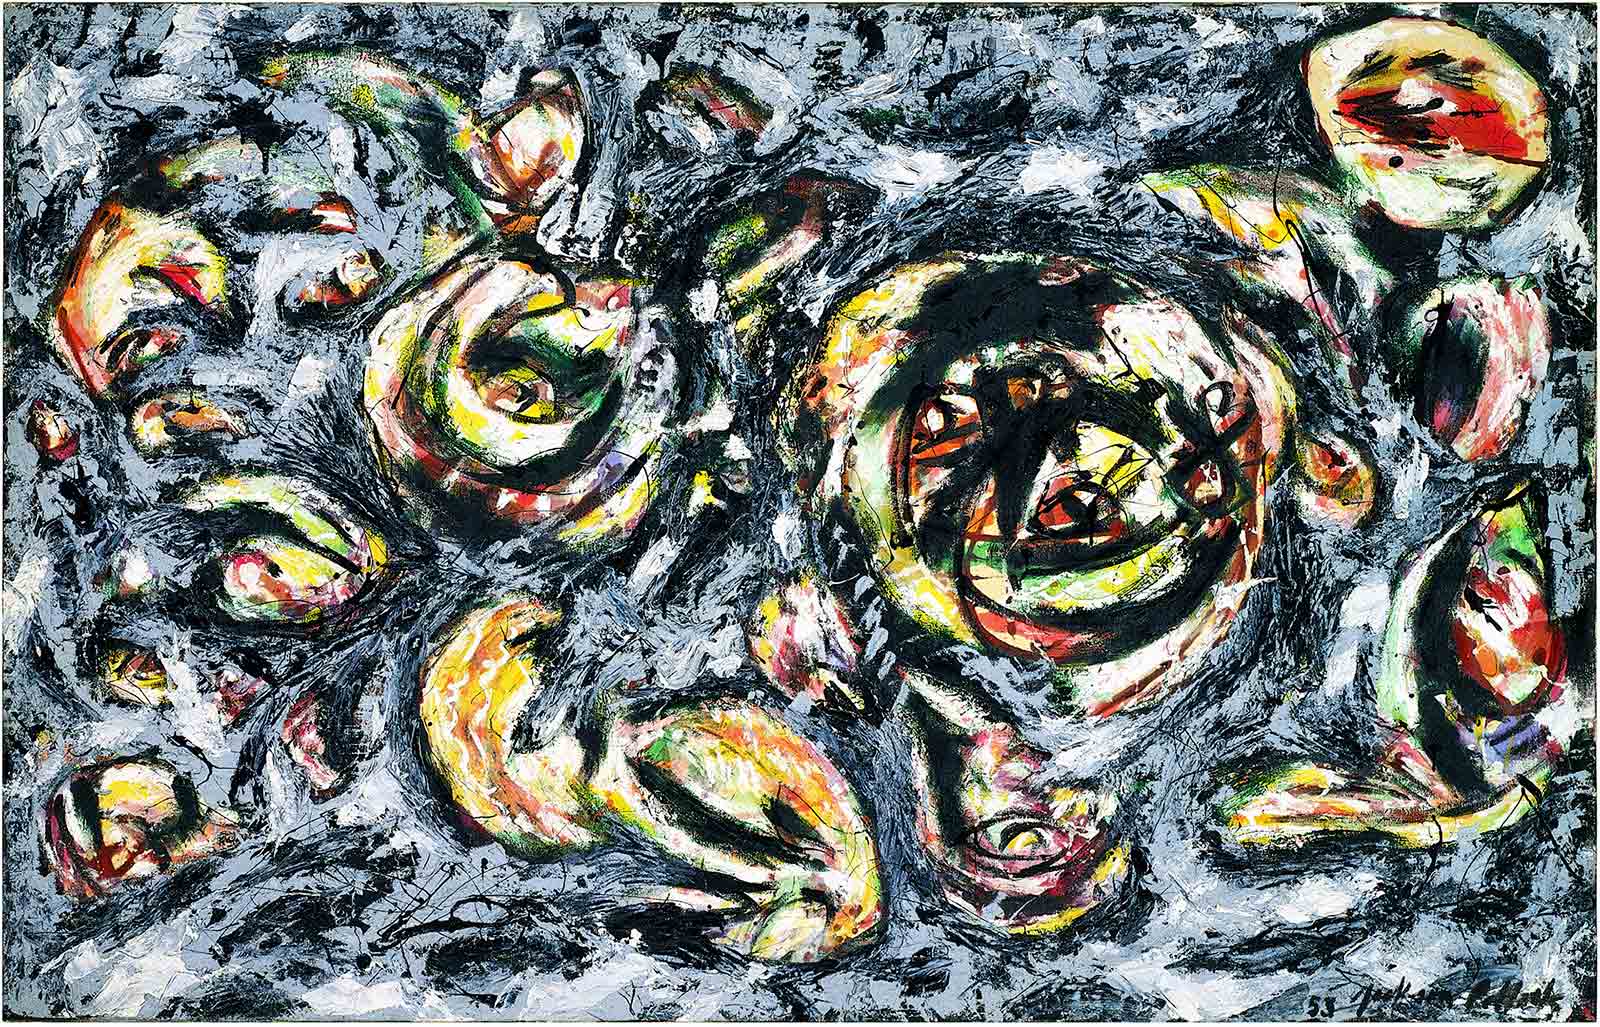 Grisura oceánica | Jackson Pollock | Guggenheim Bilbao Museoa